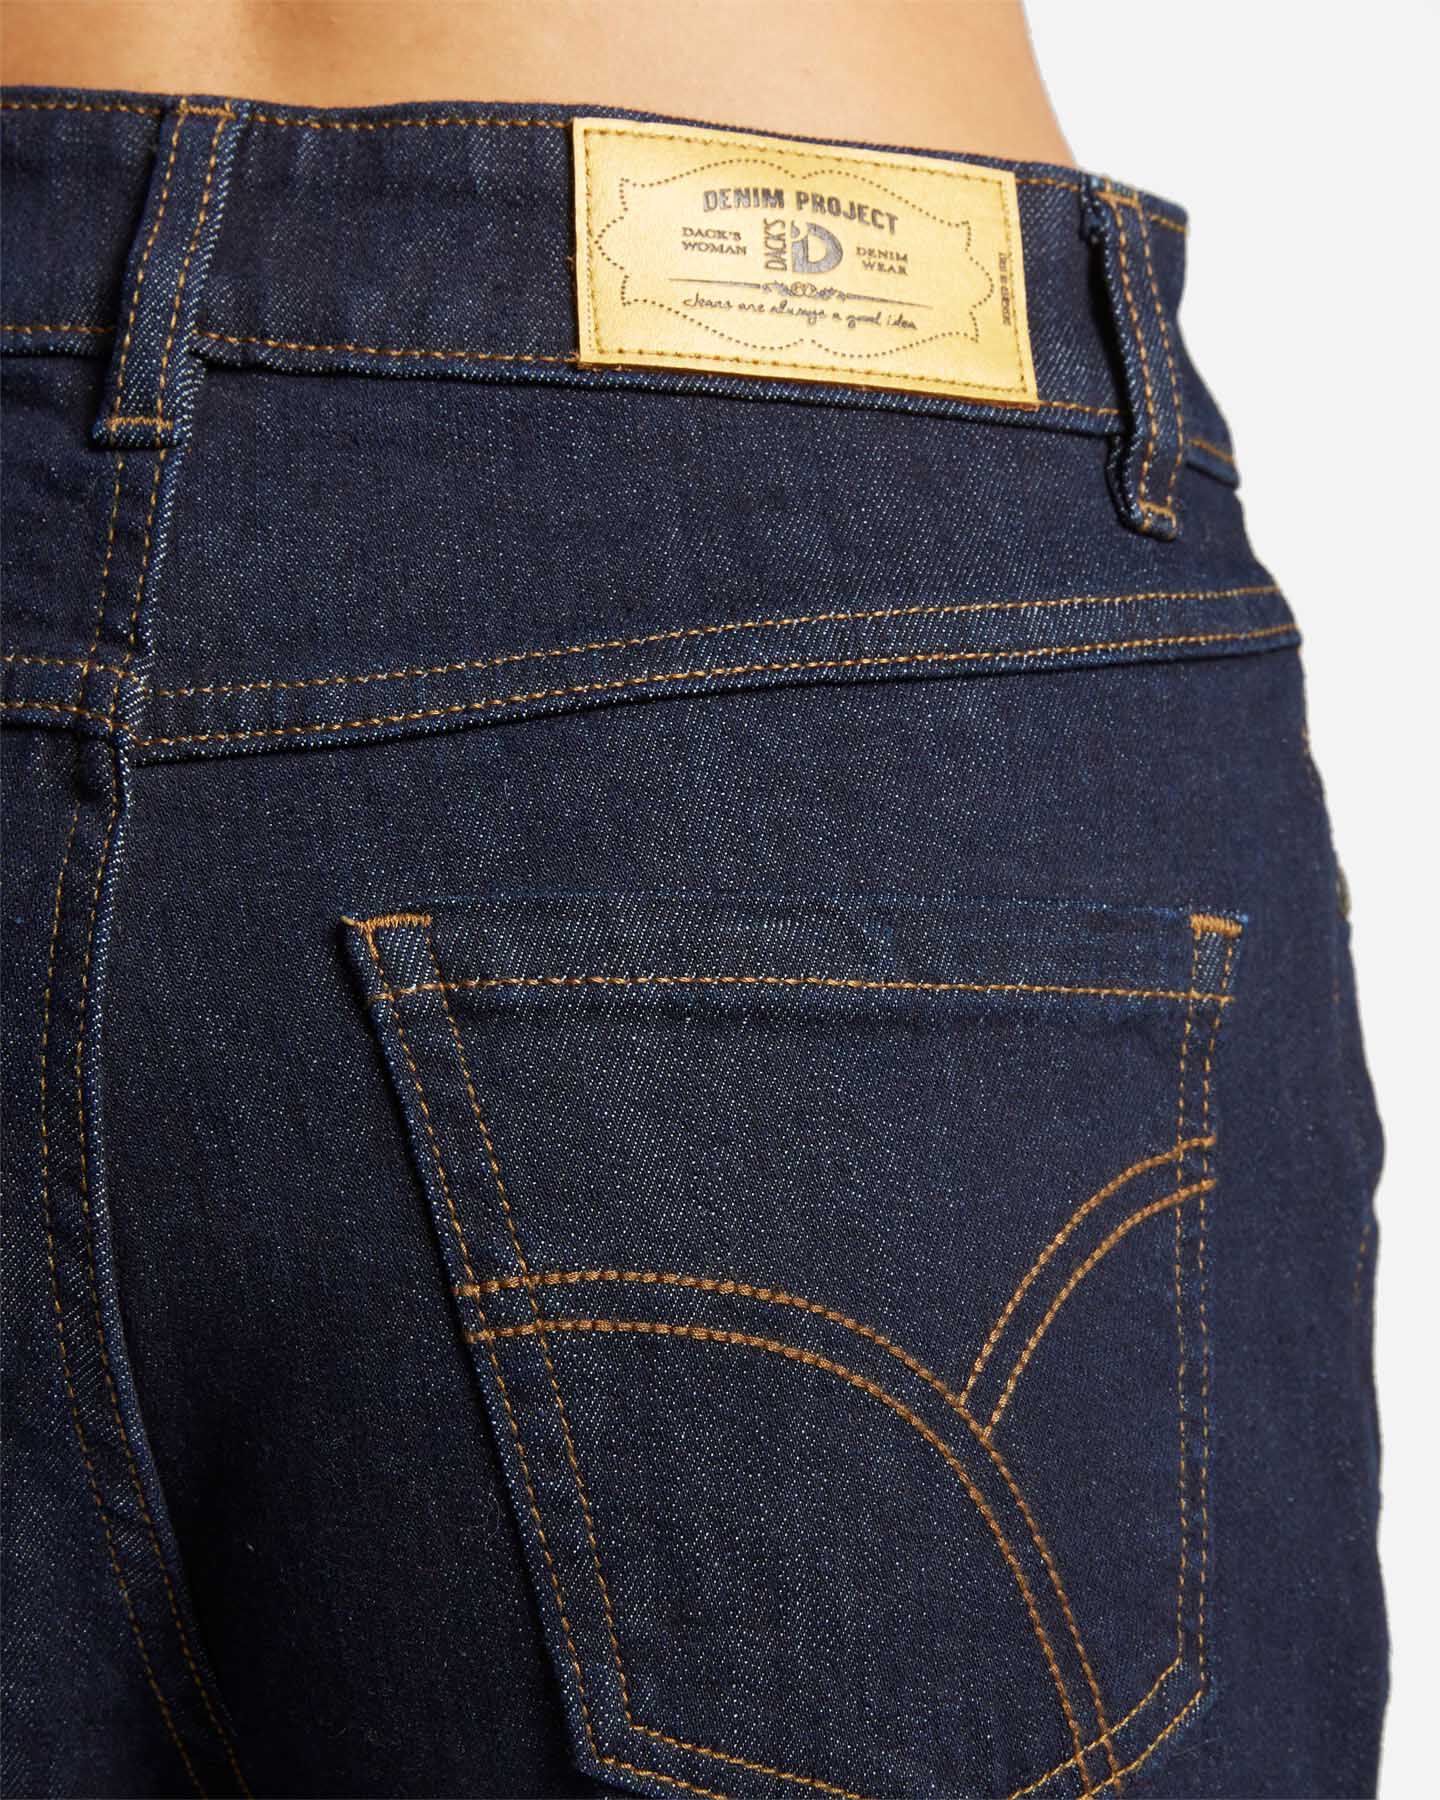  Jeans DACK'S DENIM PROJECT W S4127057|DD|46 scatto 3